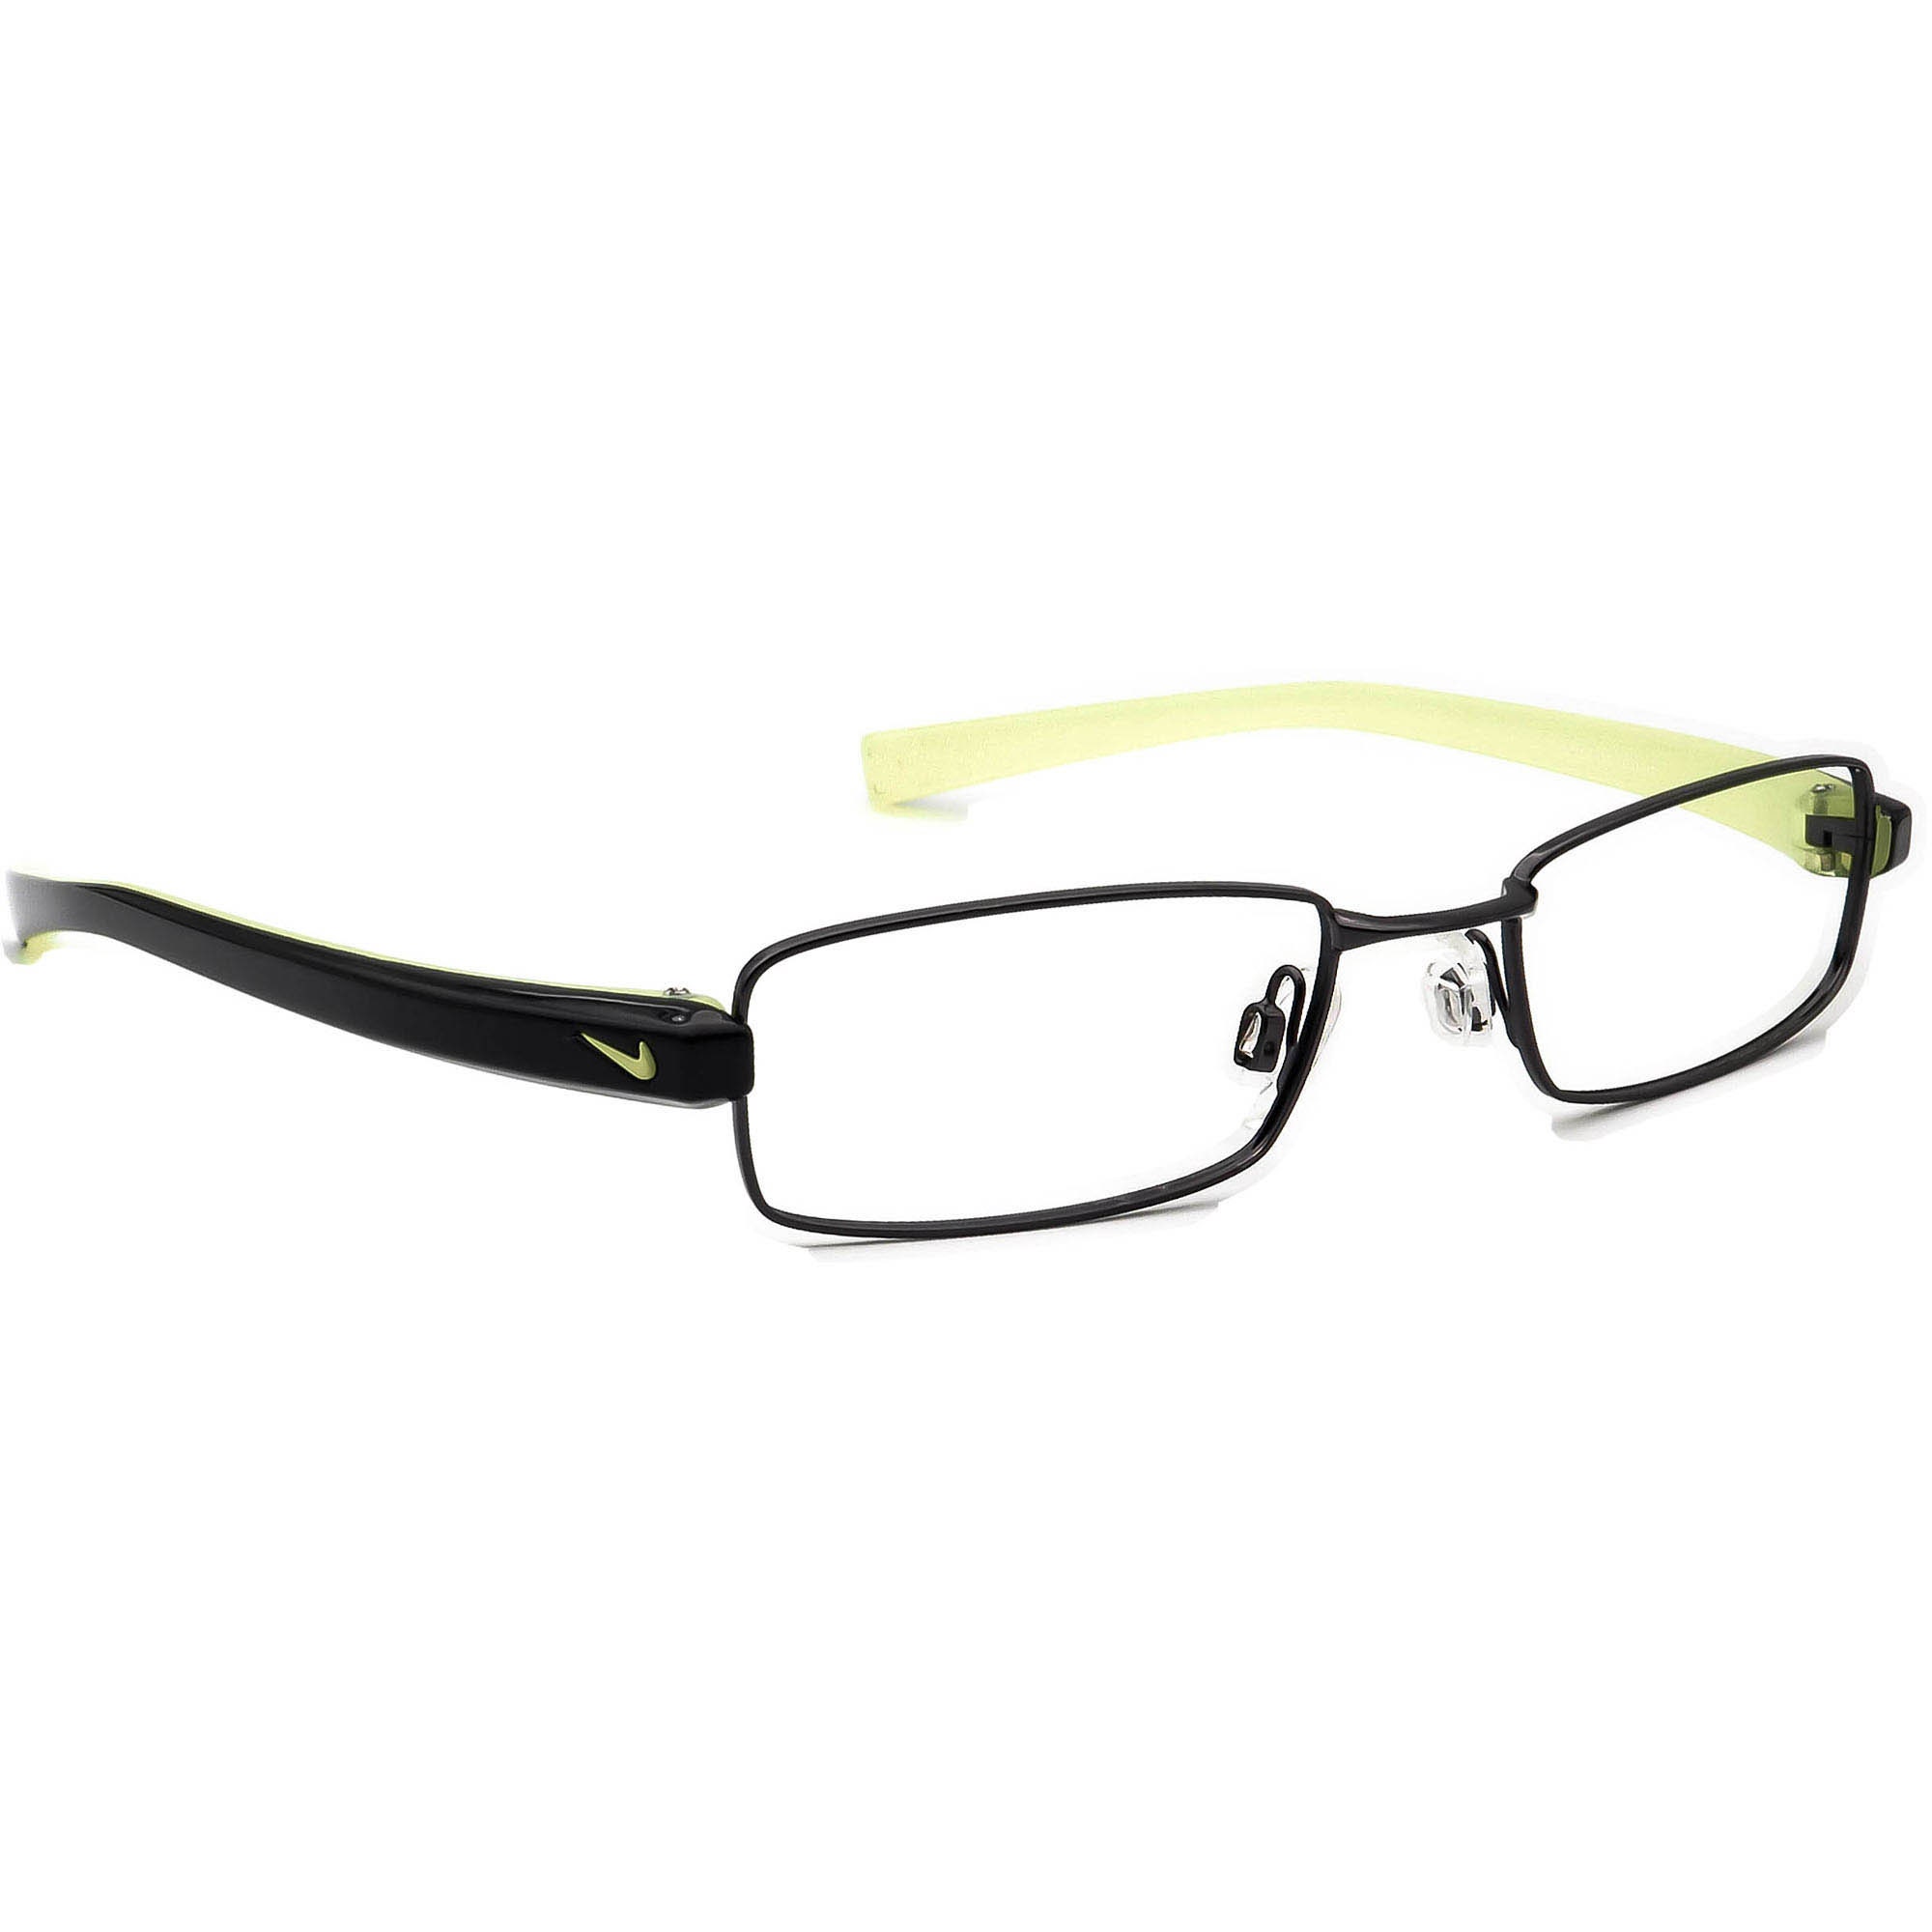 Nike Eyeglasses 8071 Dark on Yellow